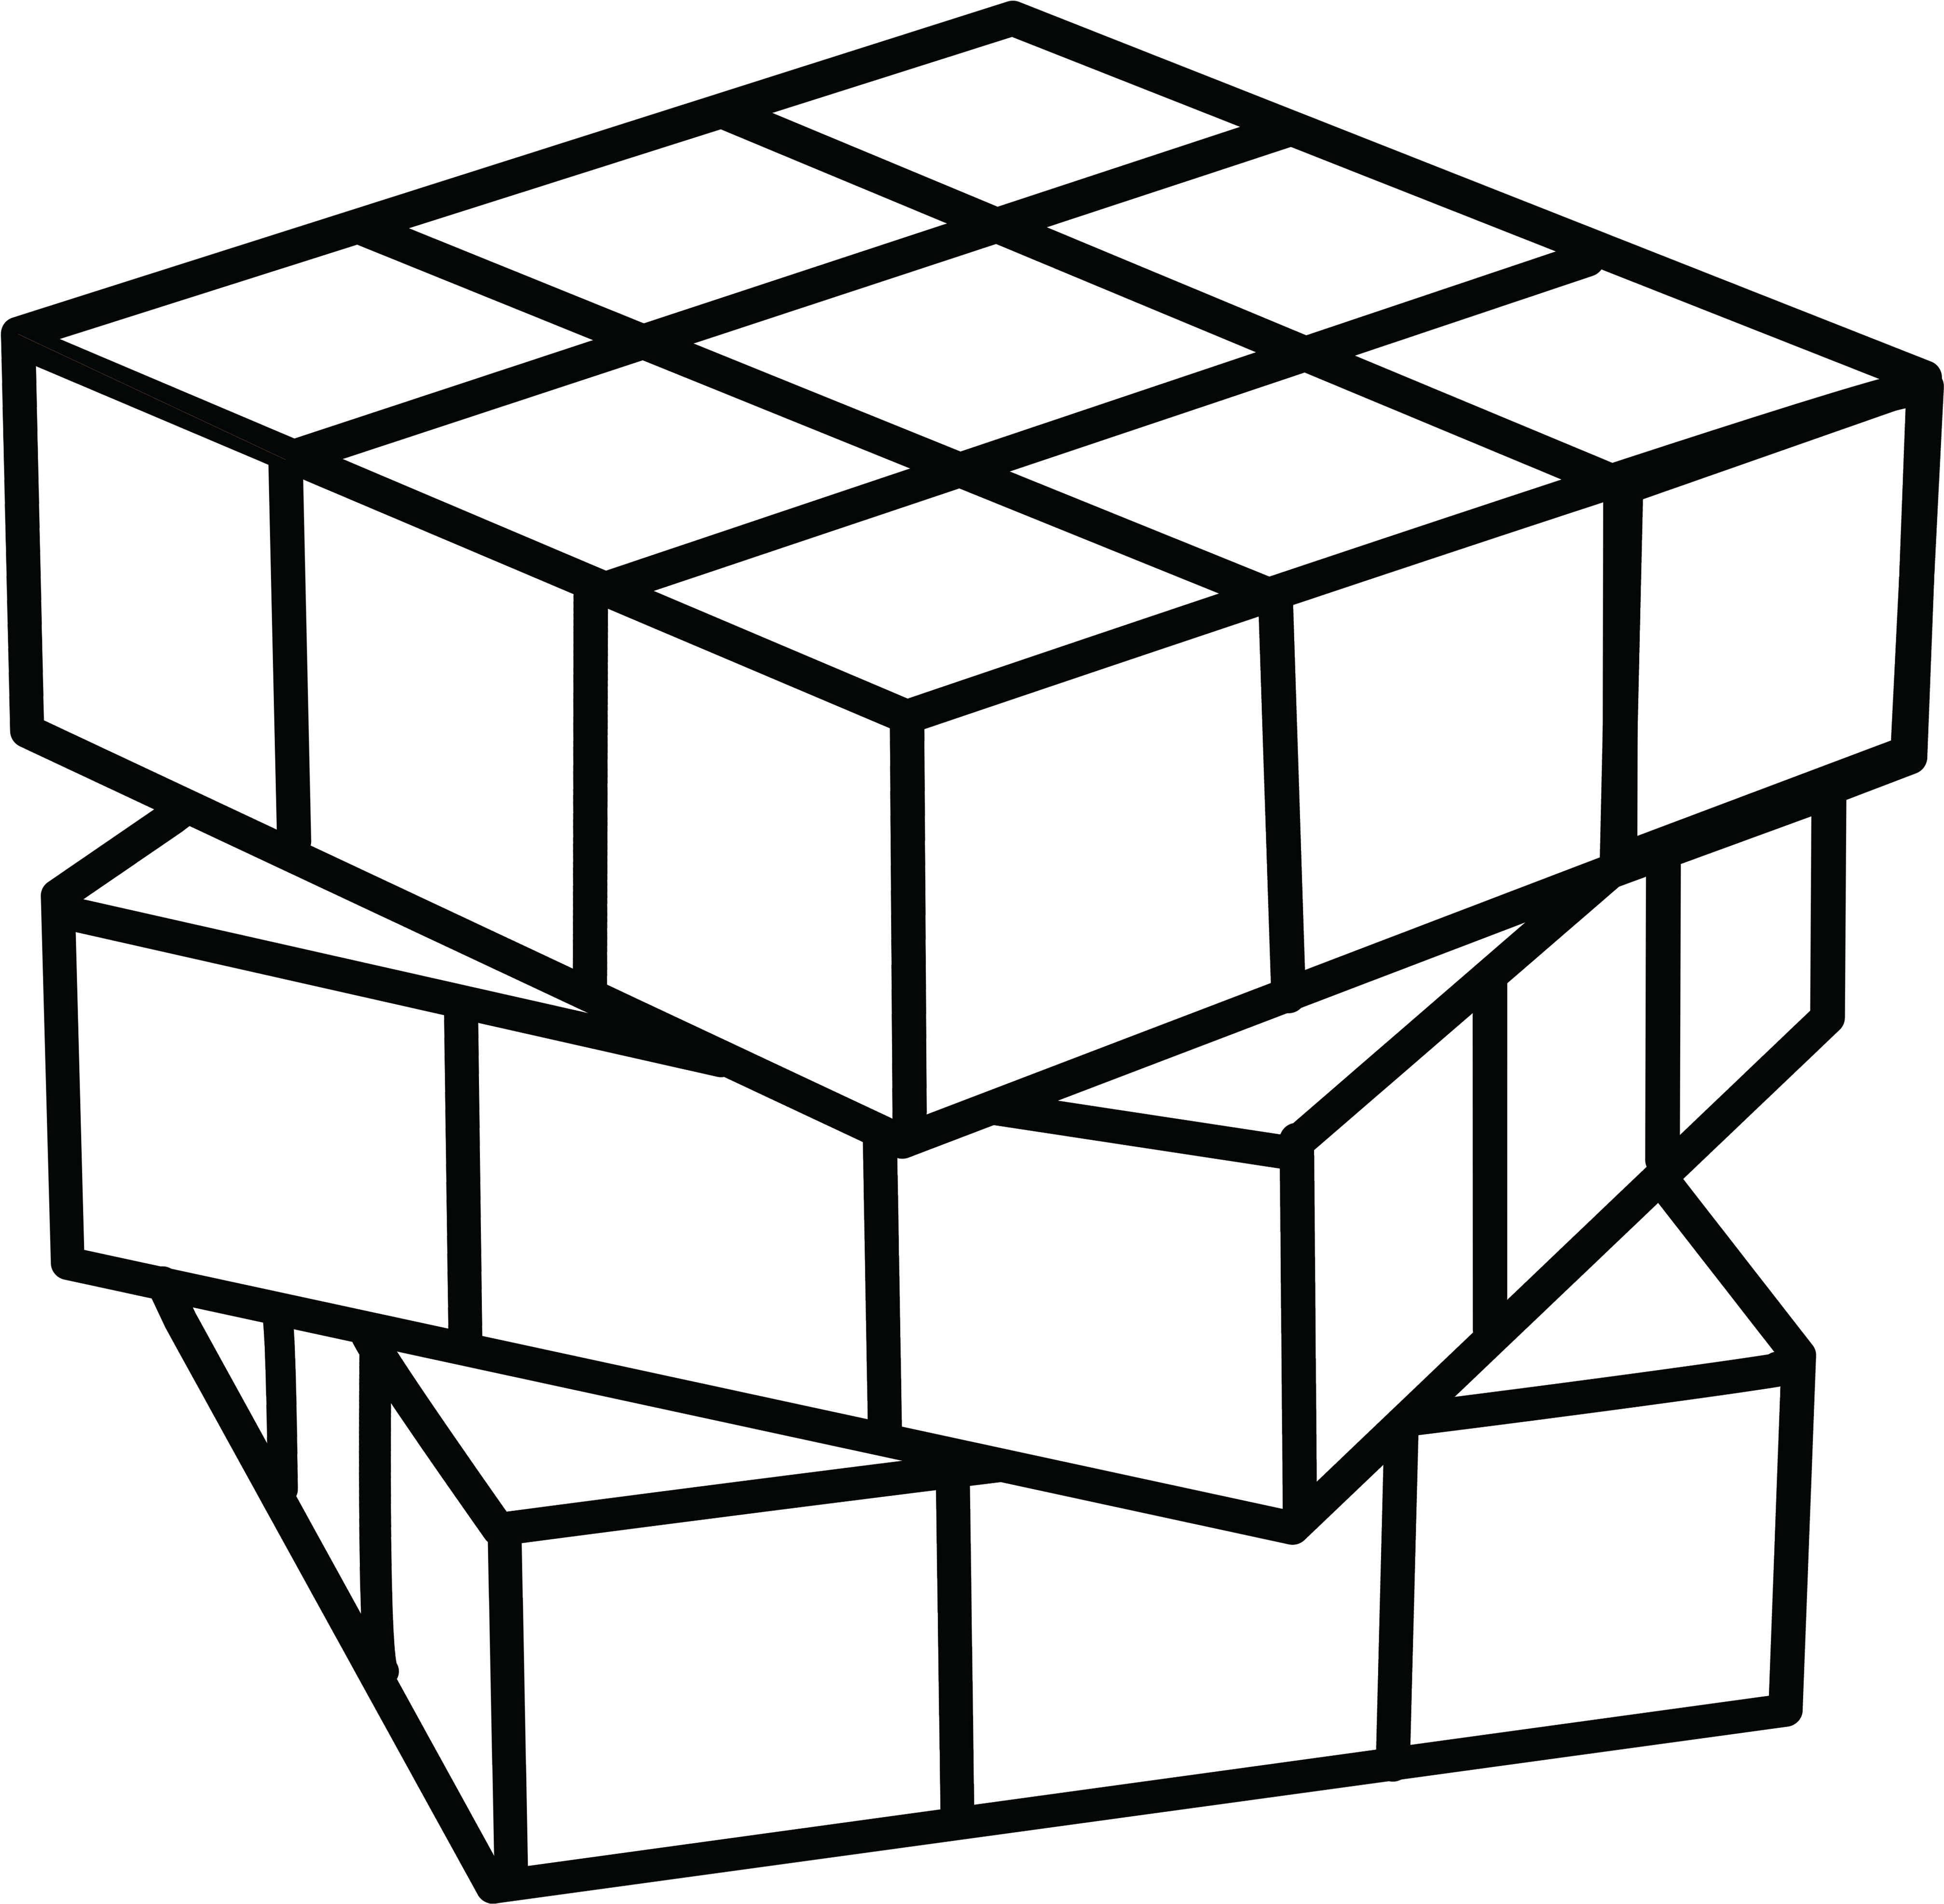 Rubik’s Cube PNG Transparent Picture